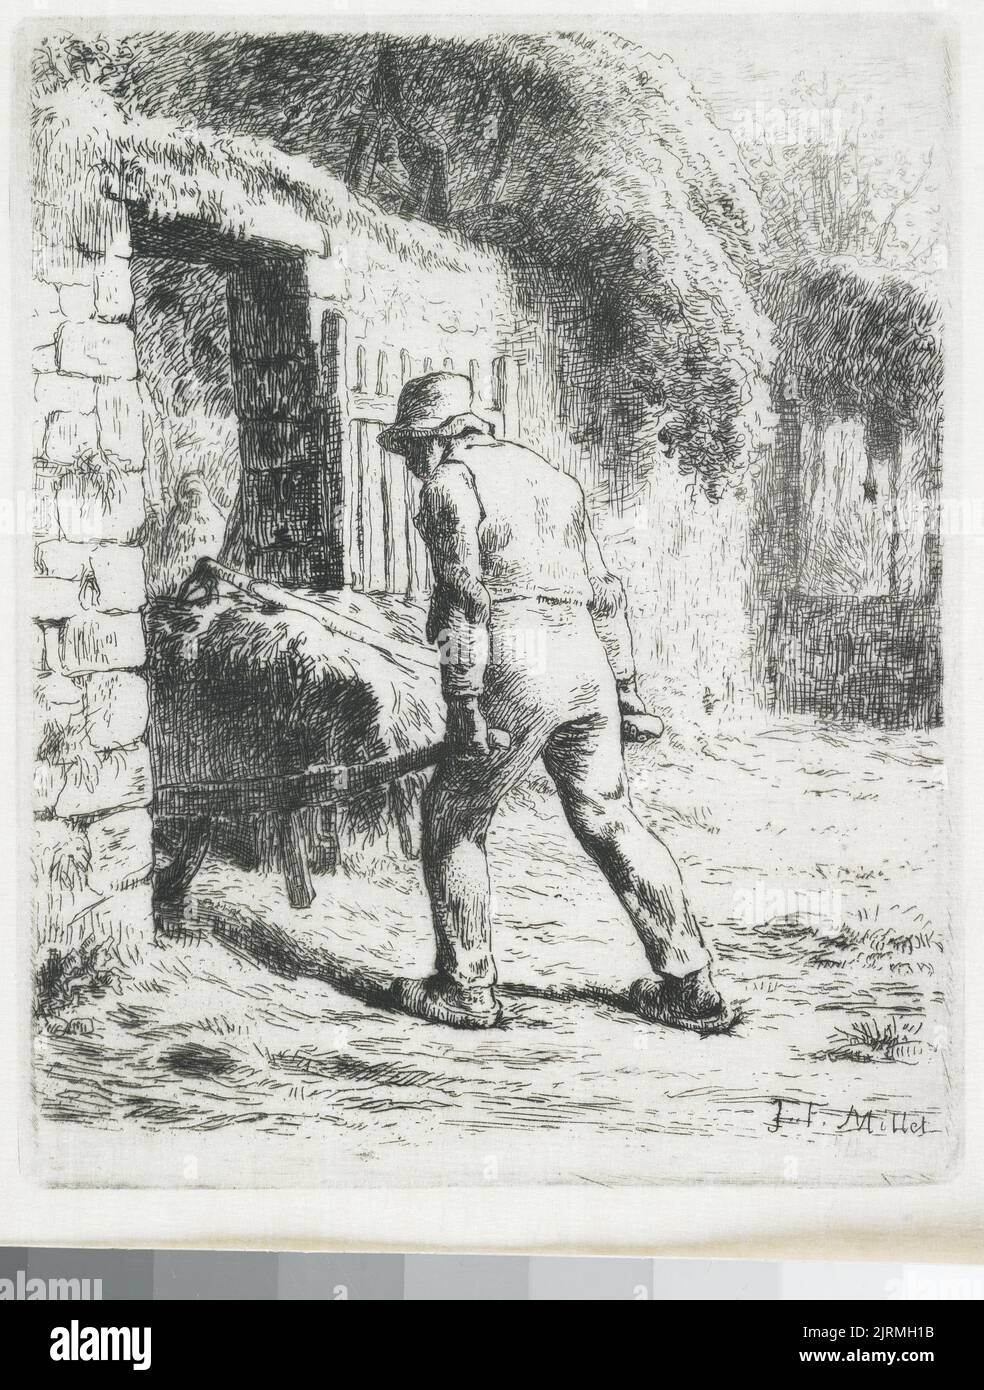 Man with a wheelbarrow (Le paysan rentrant du fumier), 1855, France, by Jean-François Millet. Stock Photo